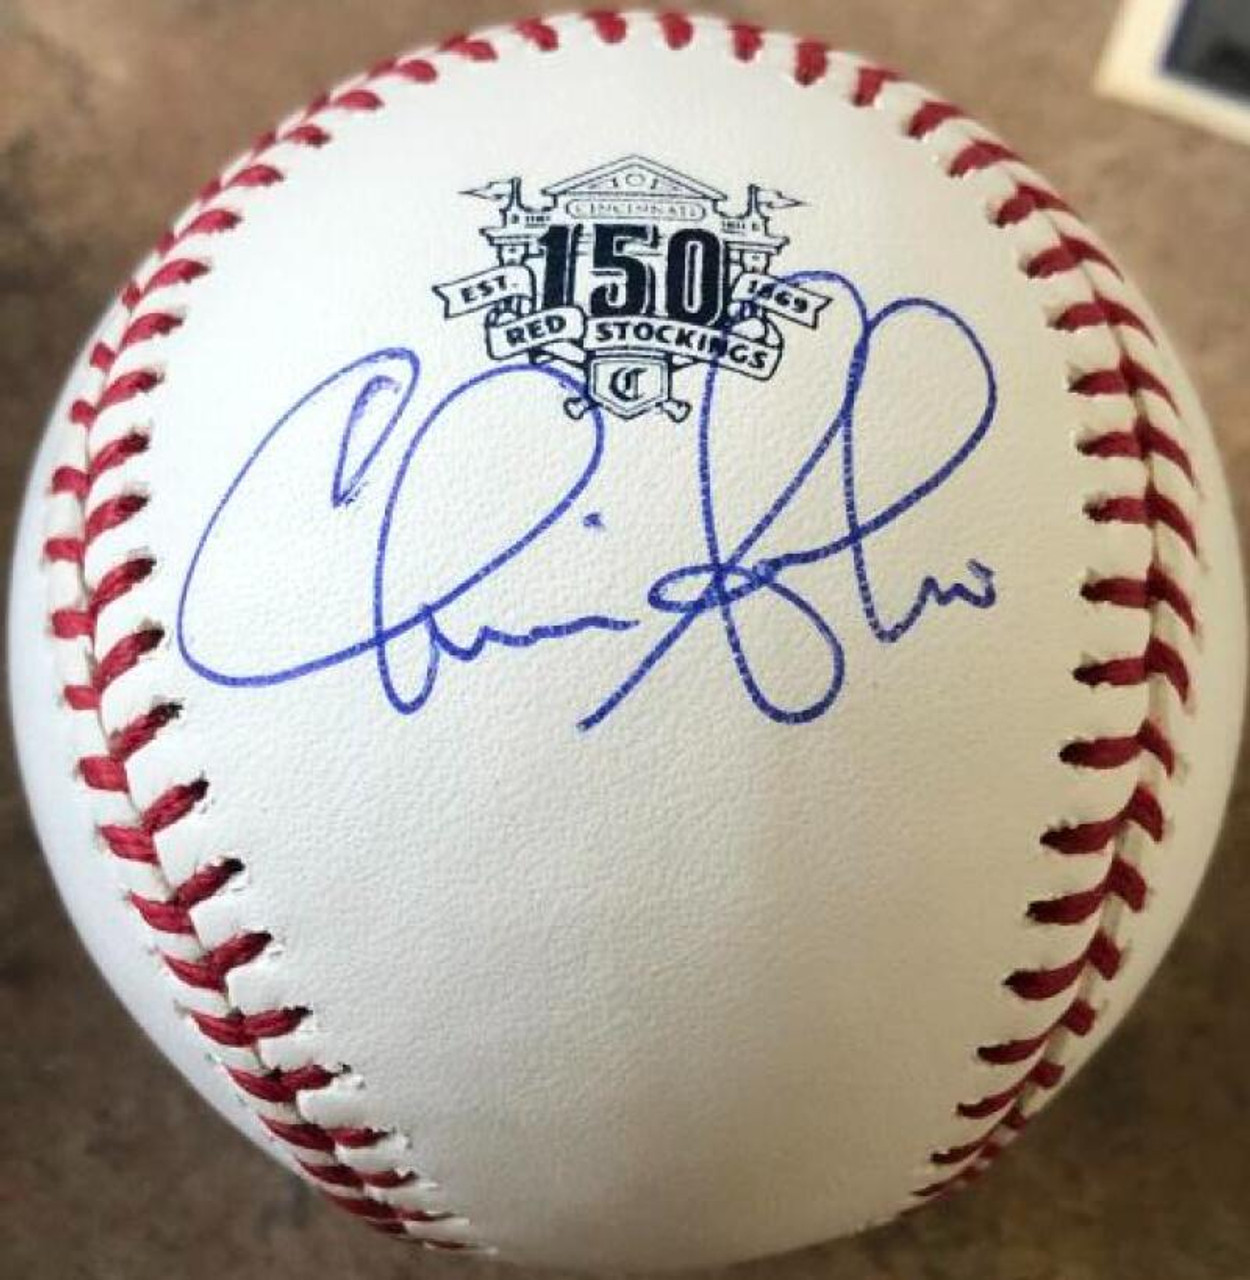 Chris Sabo Autographed Cincinnati Reds 150th Anniversary Baseball 88-93, 96